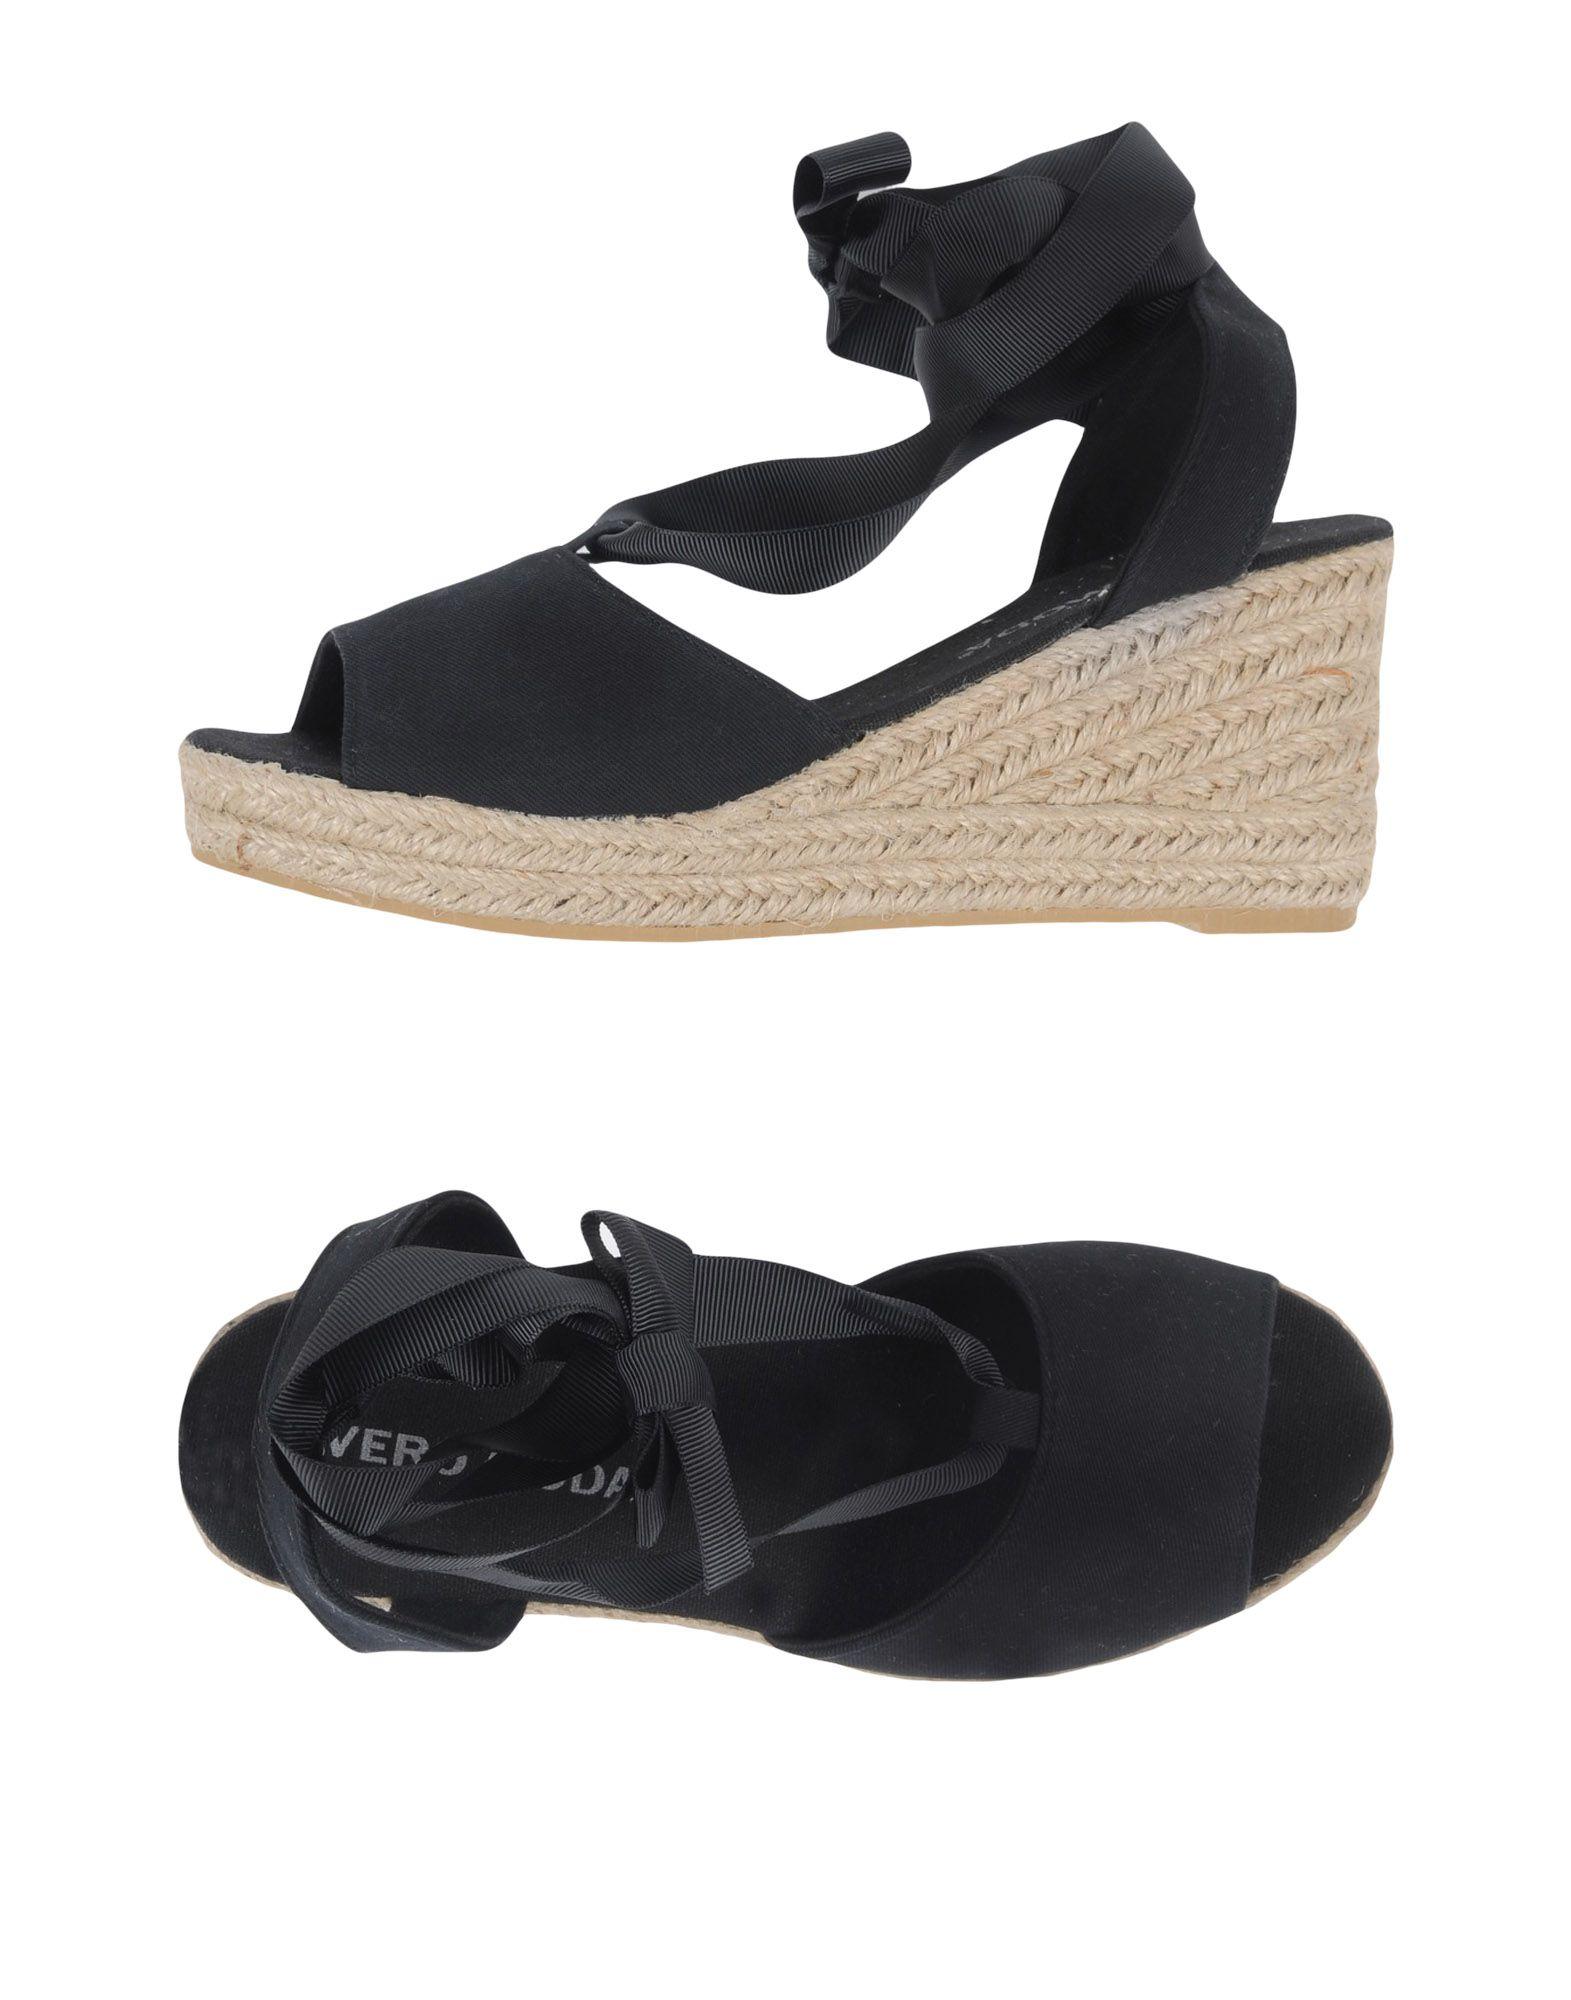 Vero Moda Sandals In Black | ModeSens